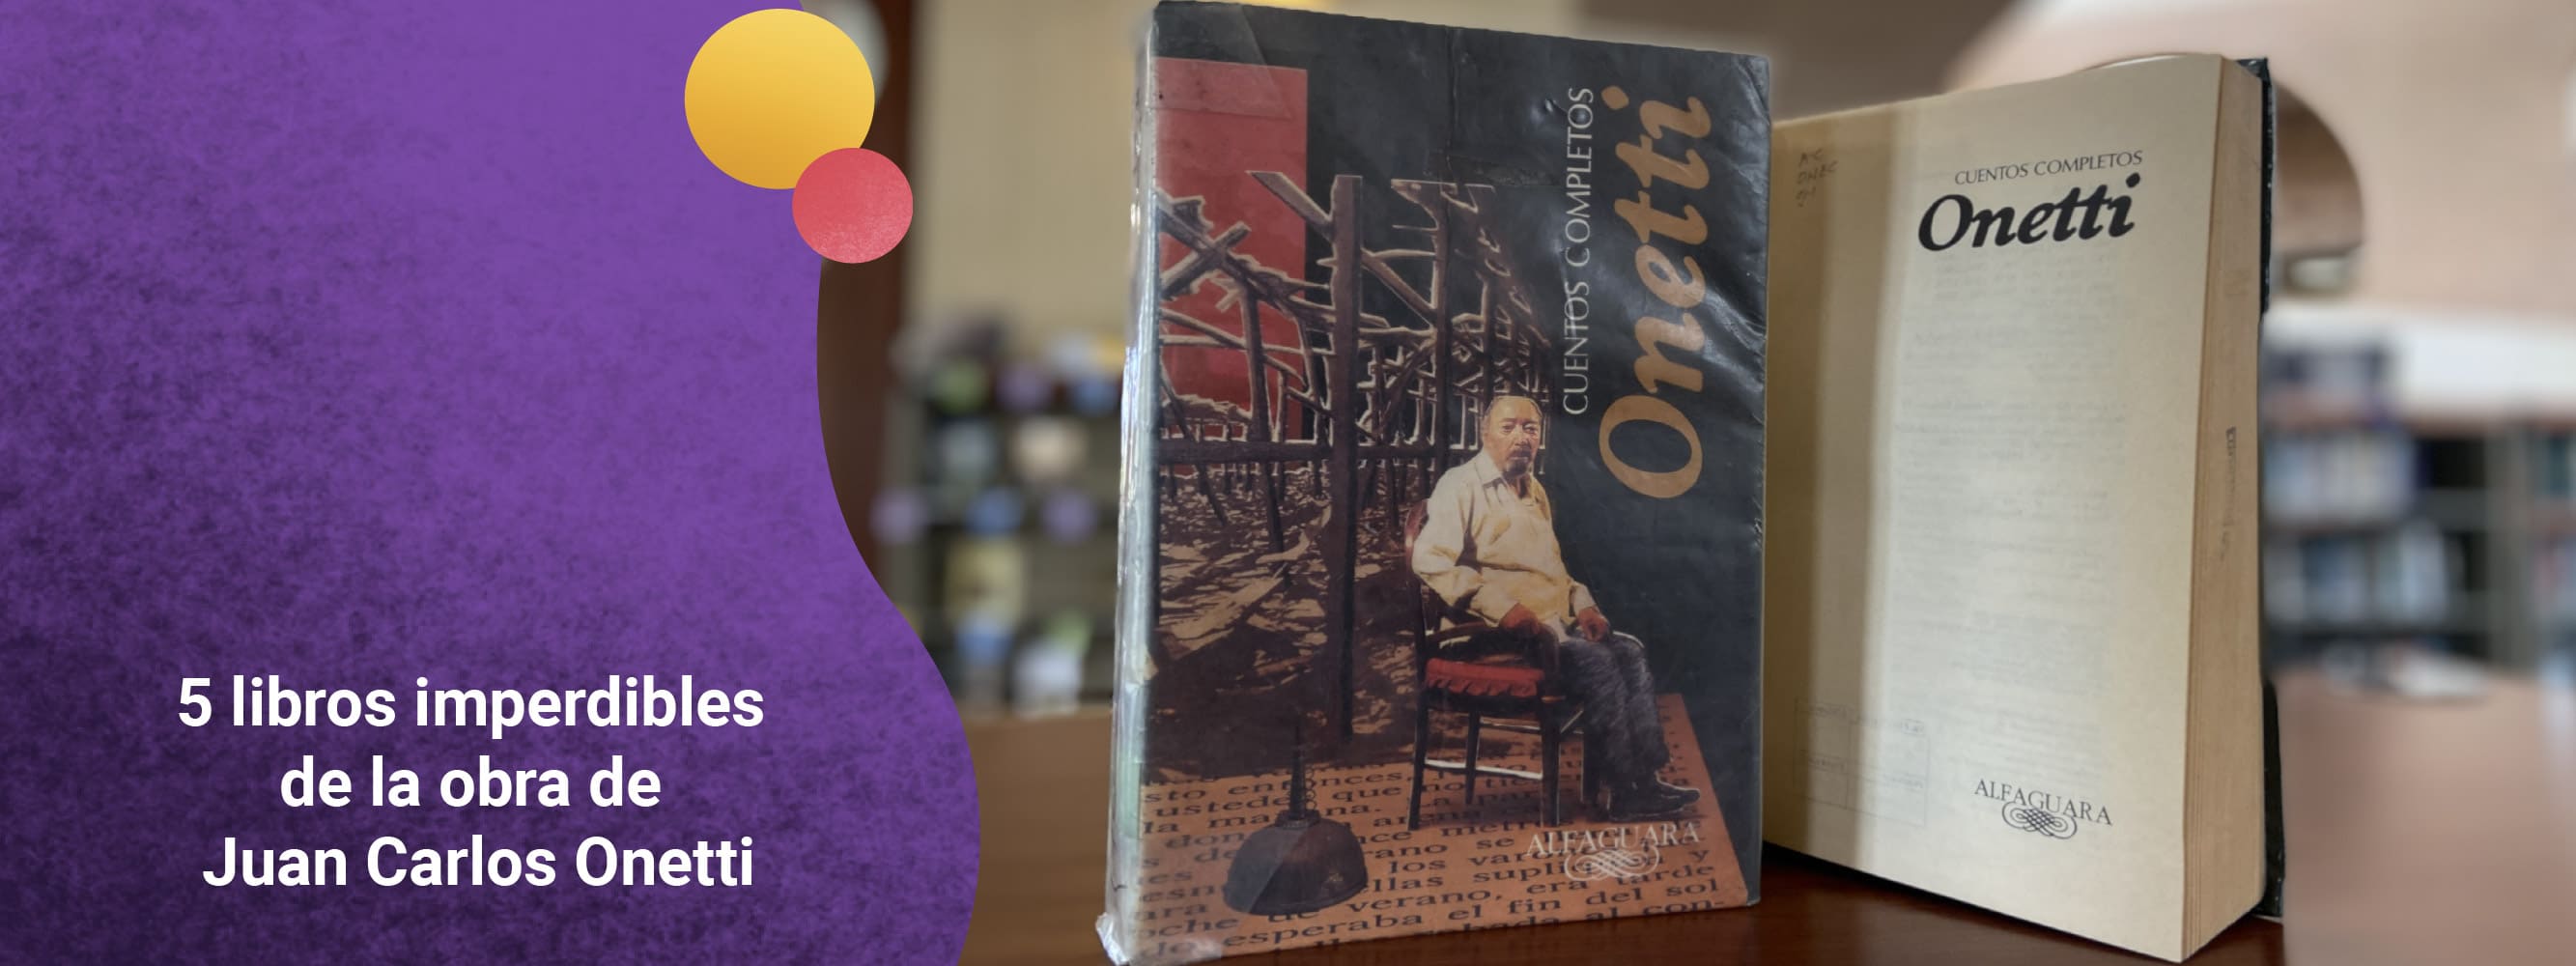 5 libros imperdibles de la obra de Juan Carlos Onetti